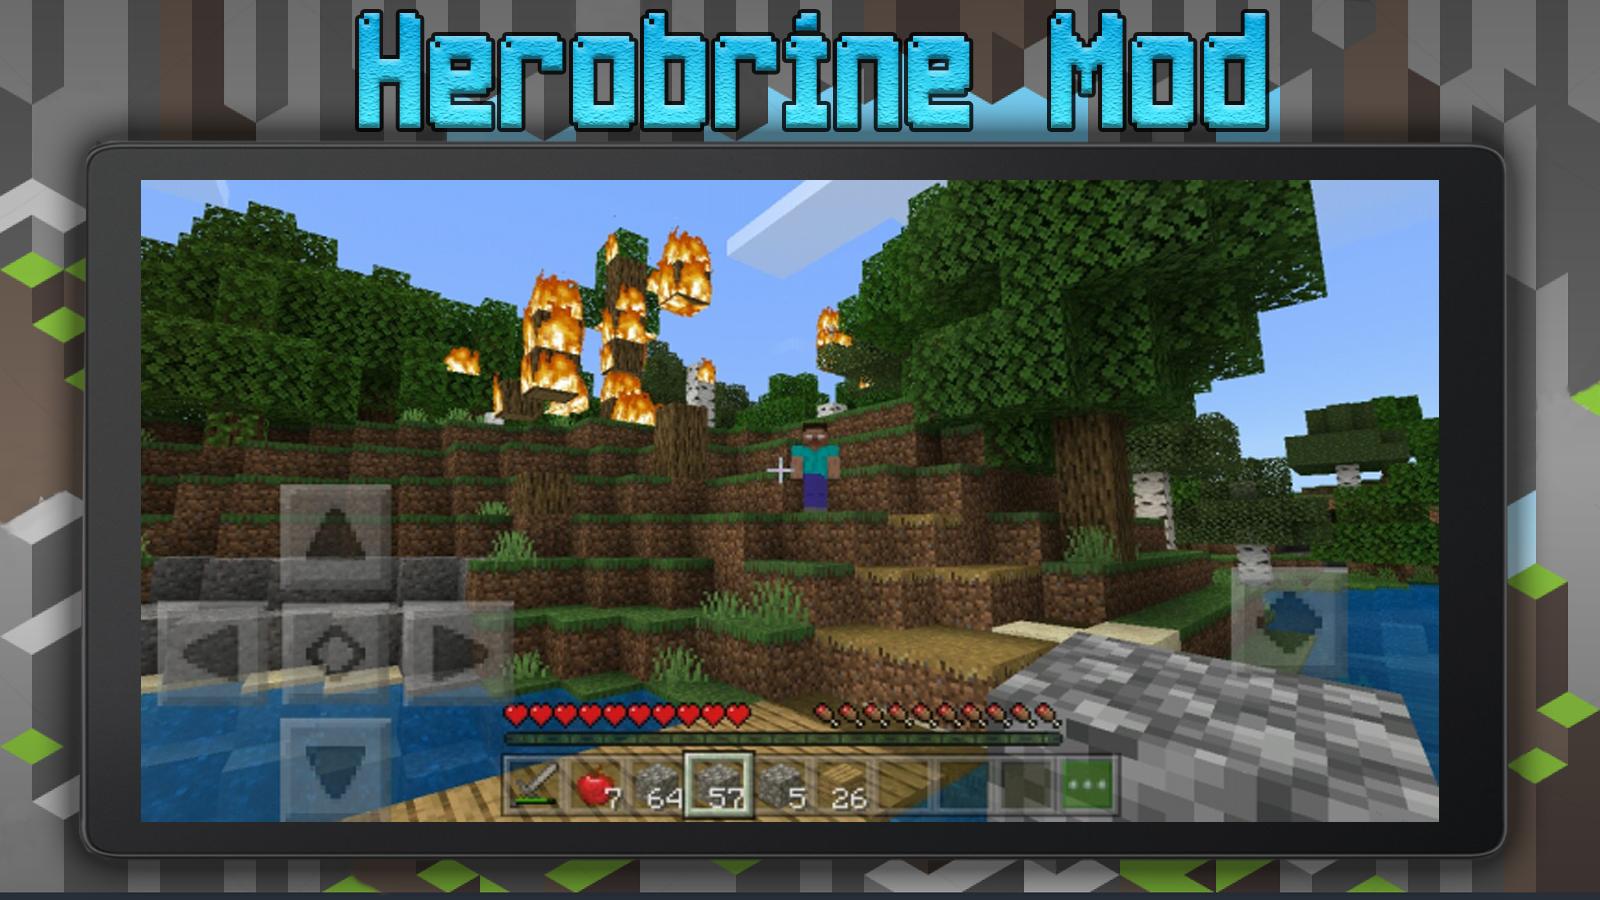 Herobrine Mod Minecraft For Android Apk Download